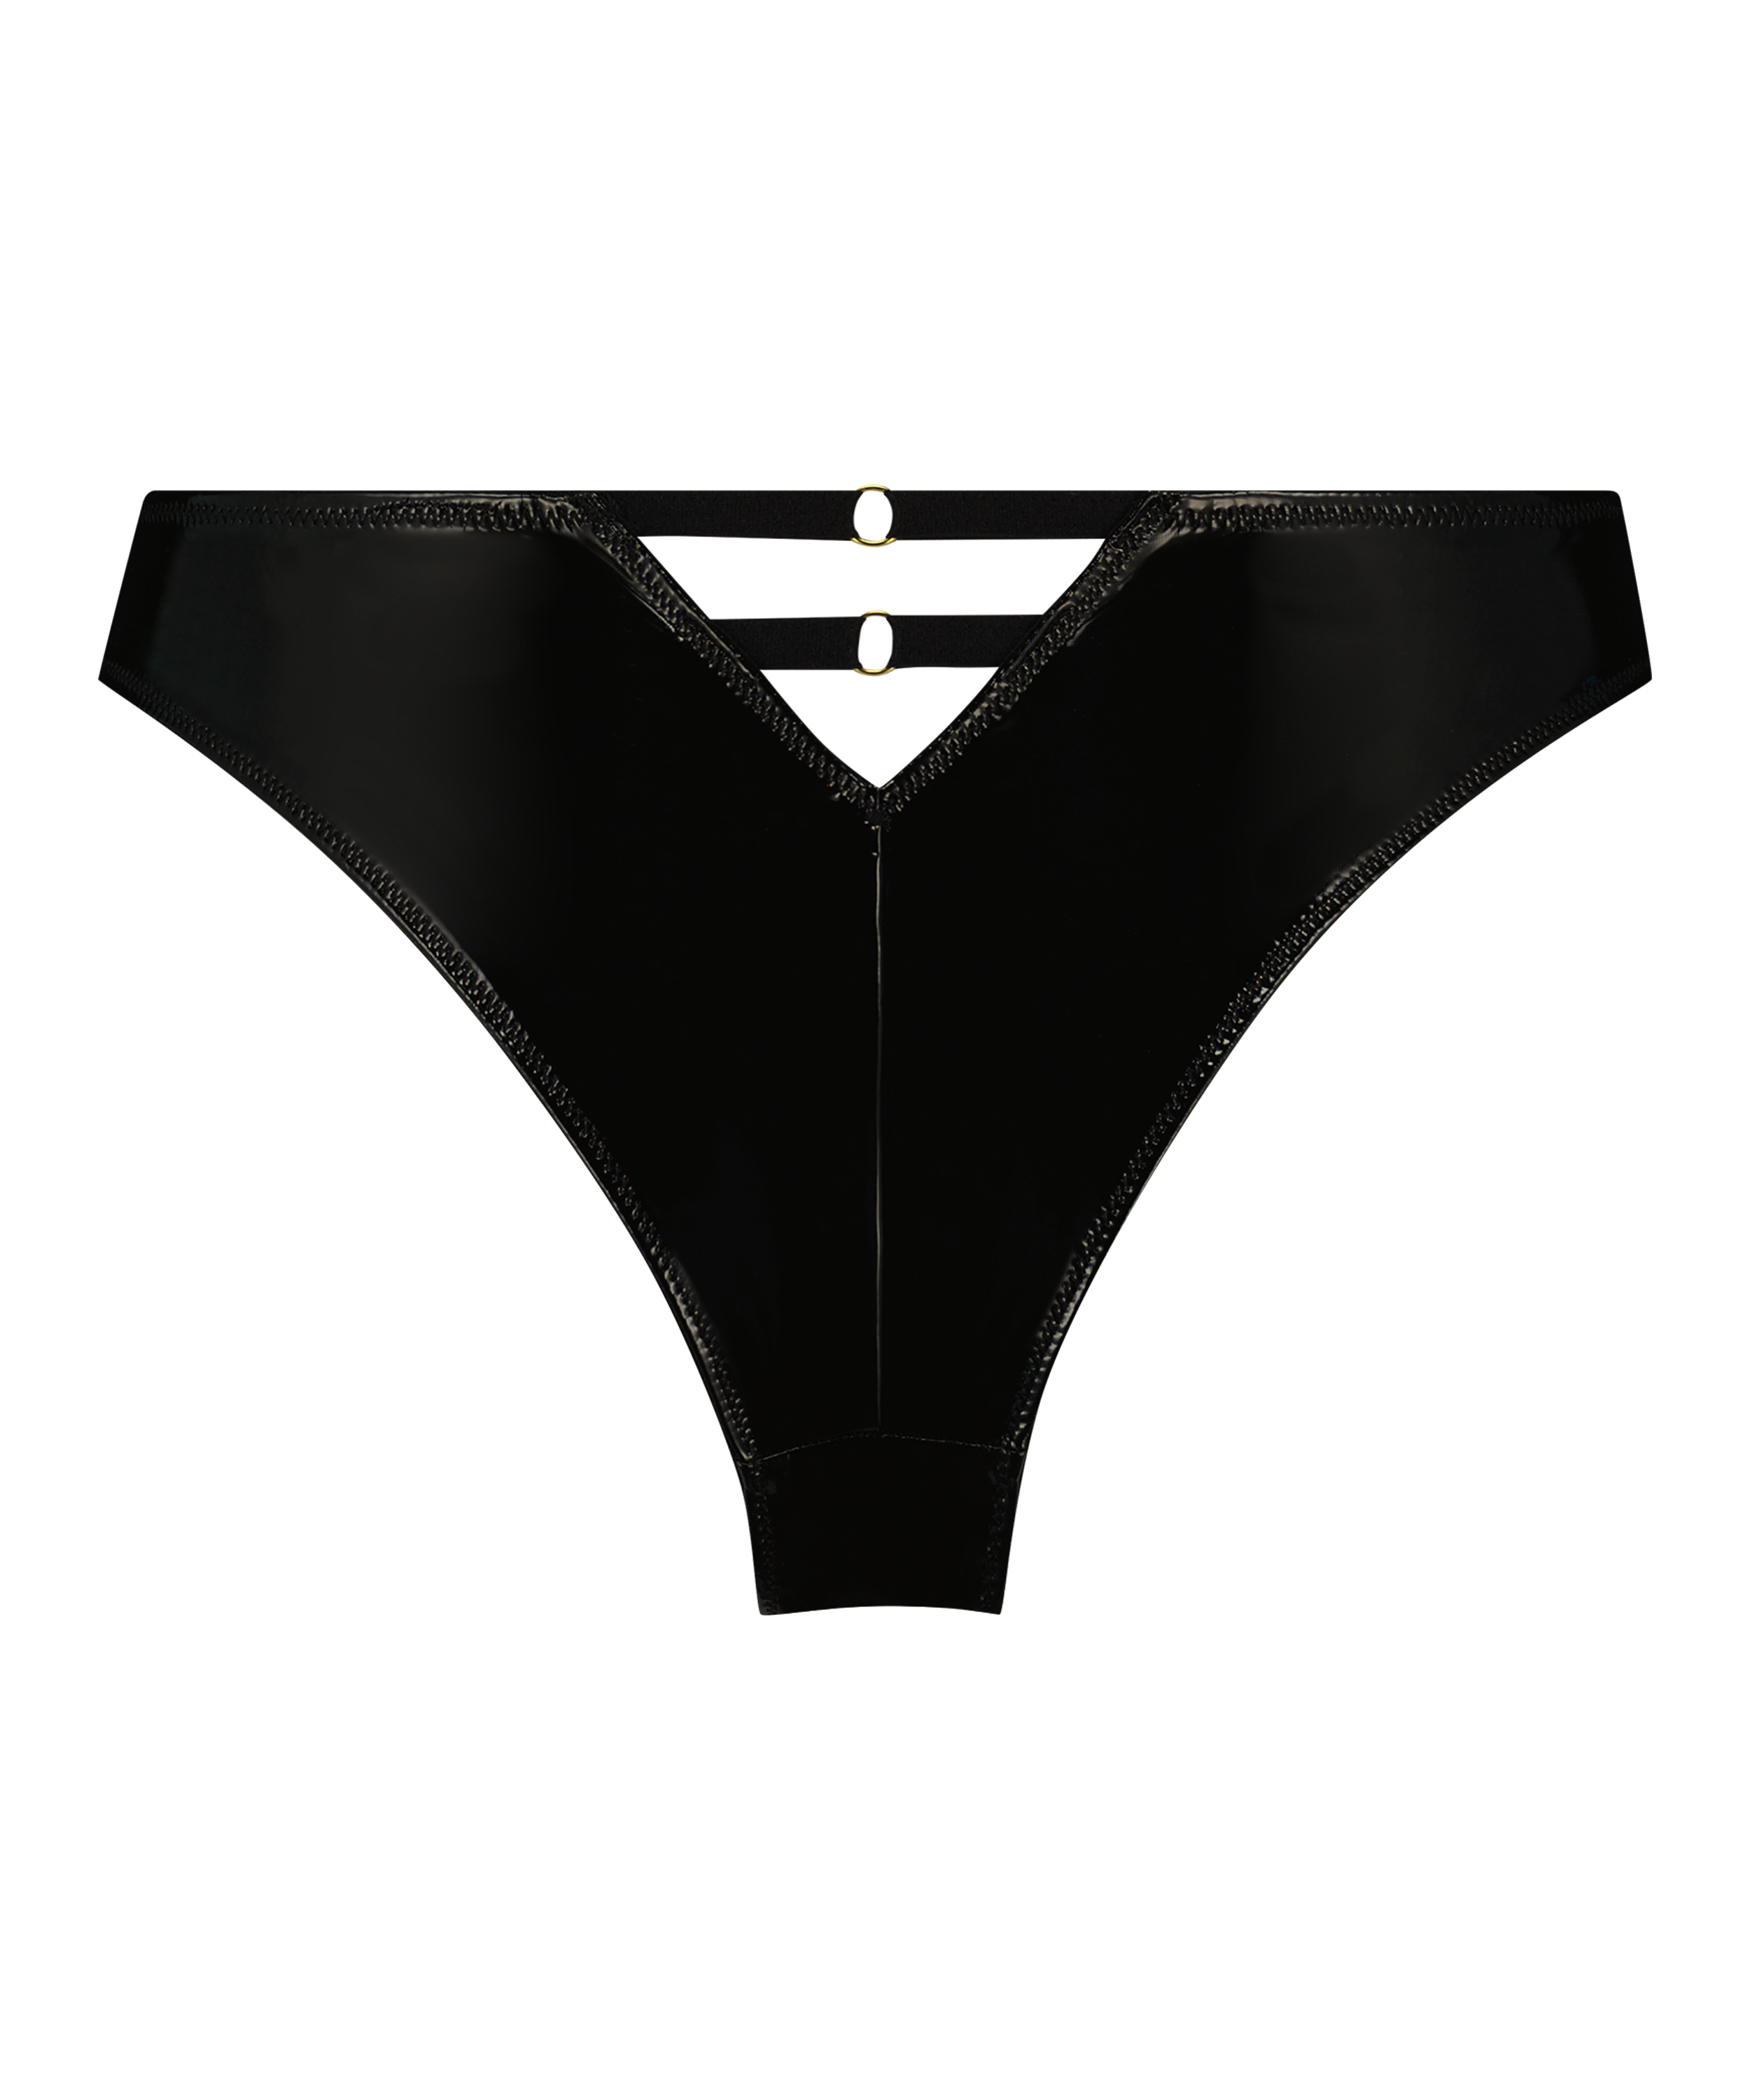 Hunkemoller Seductress Open Gusset Brazilian Briefs - ShopStyle Panties